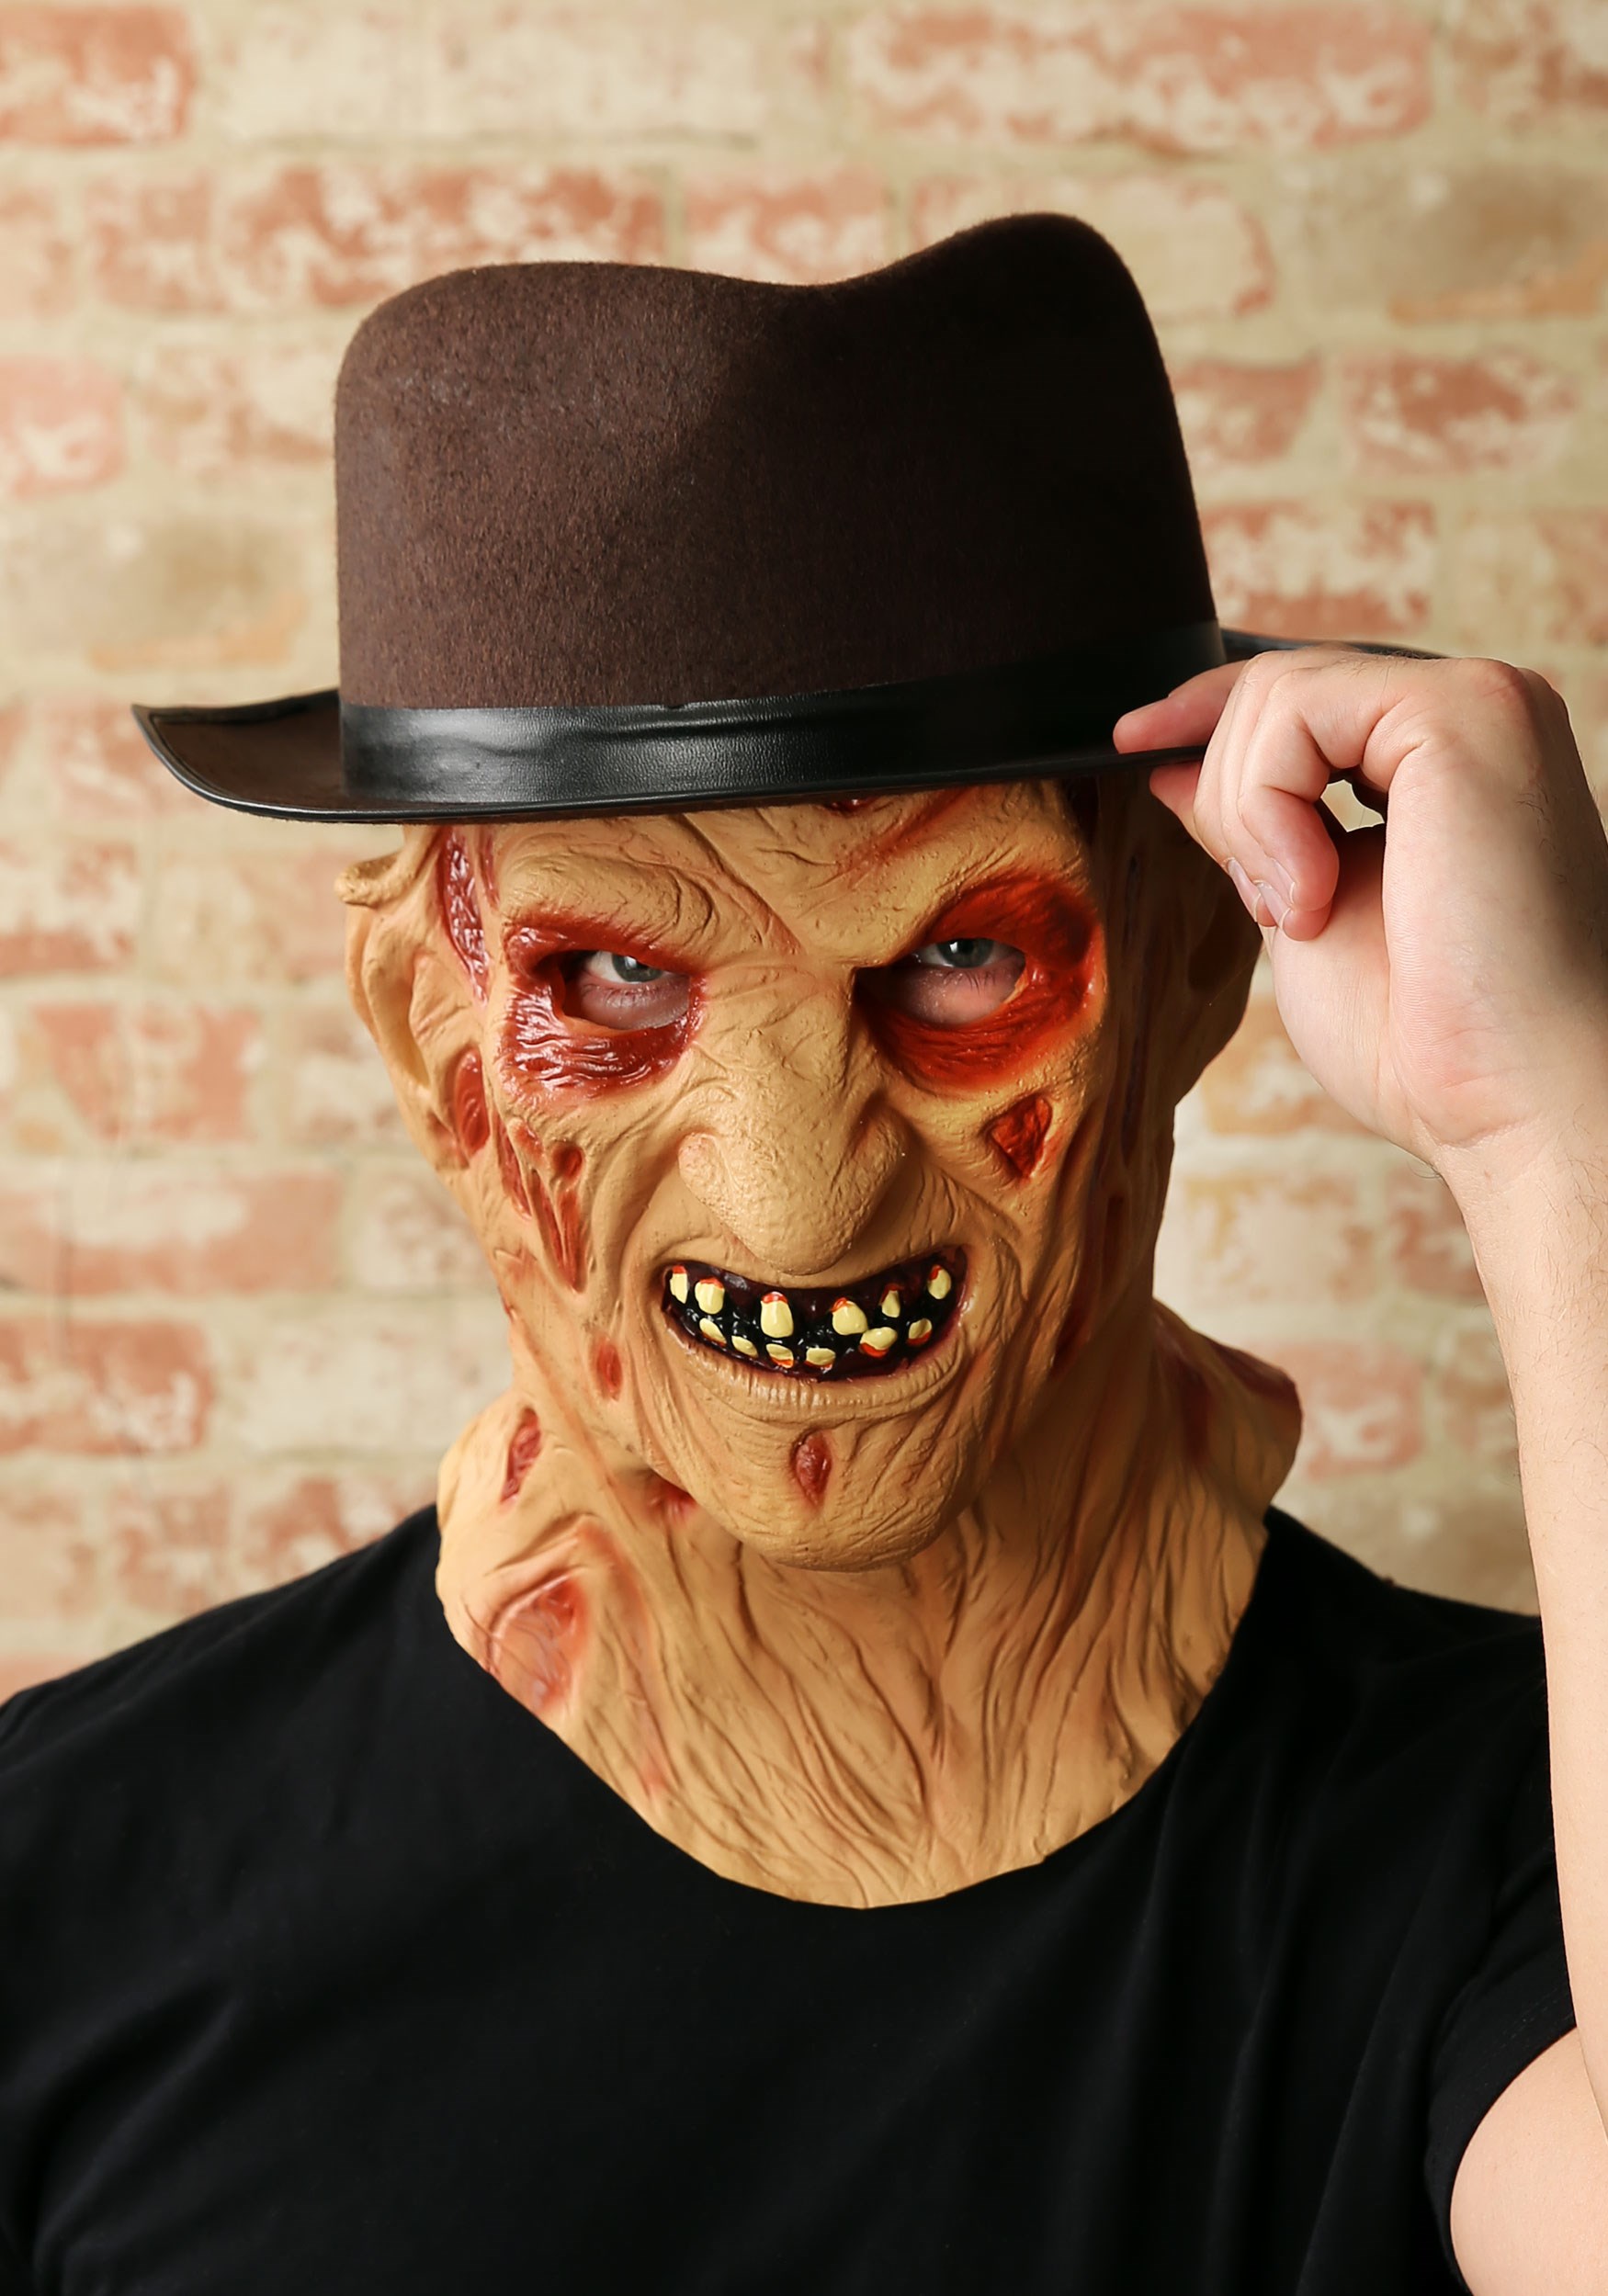 Realistic Freddy Krueger Mask from Nightmare on Elm Street